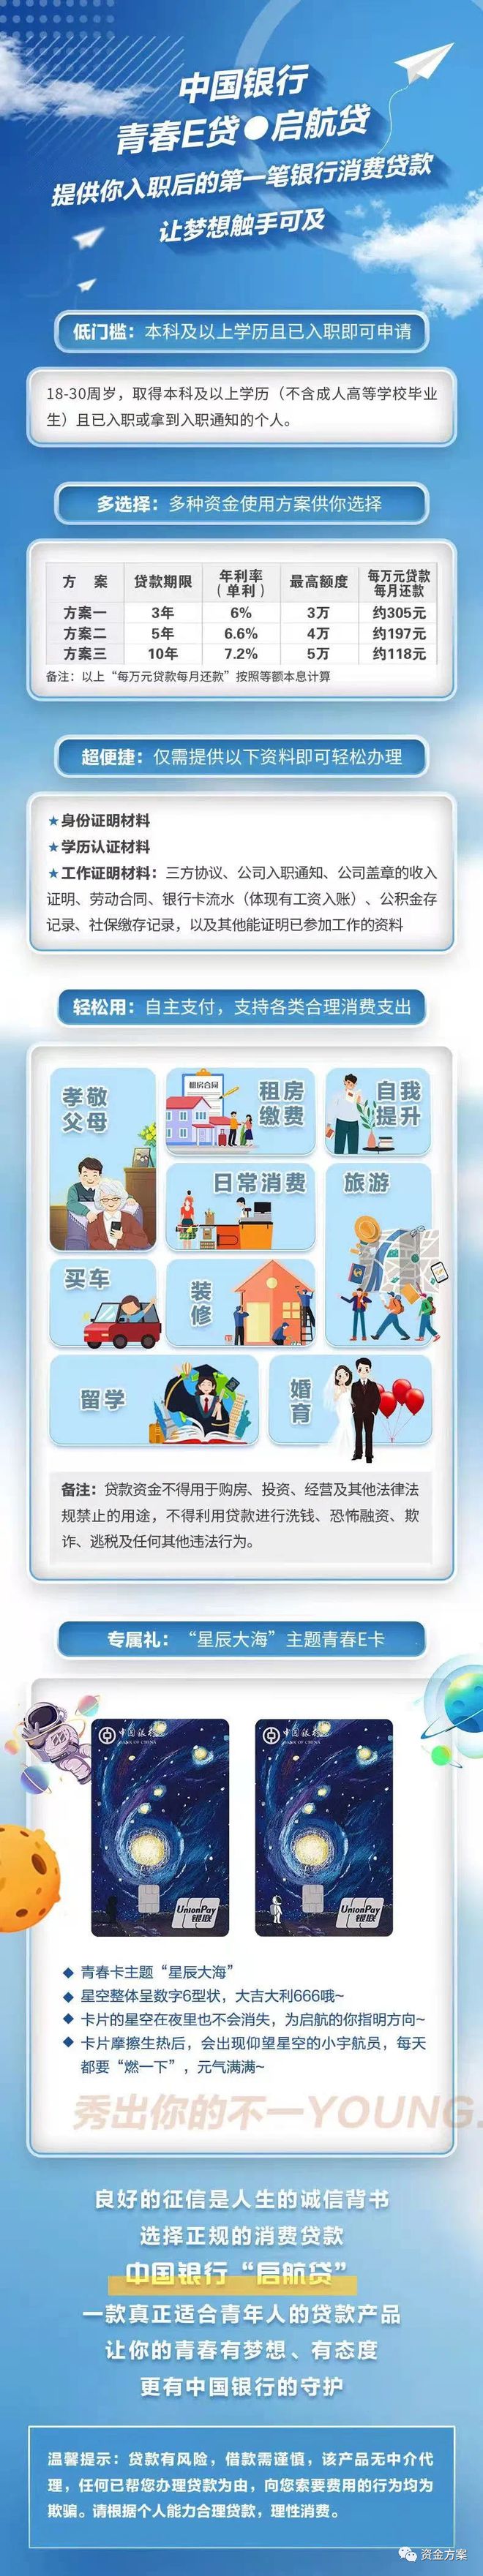 bat365中文官方网站@创业青年科左后旗政策和金融产品汇总在这里(图6)